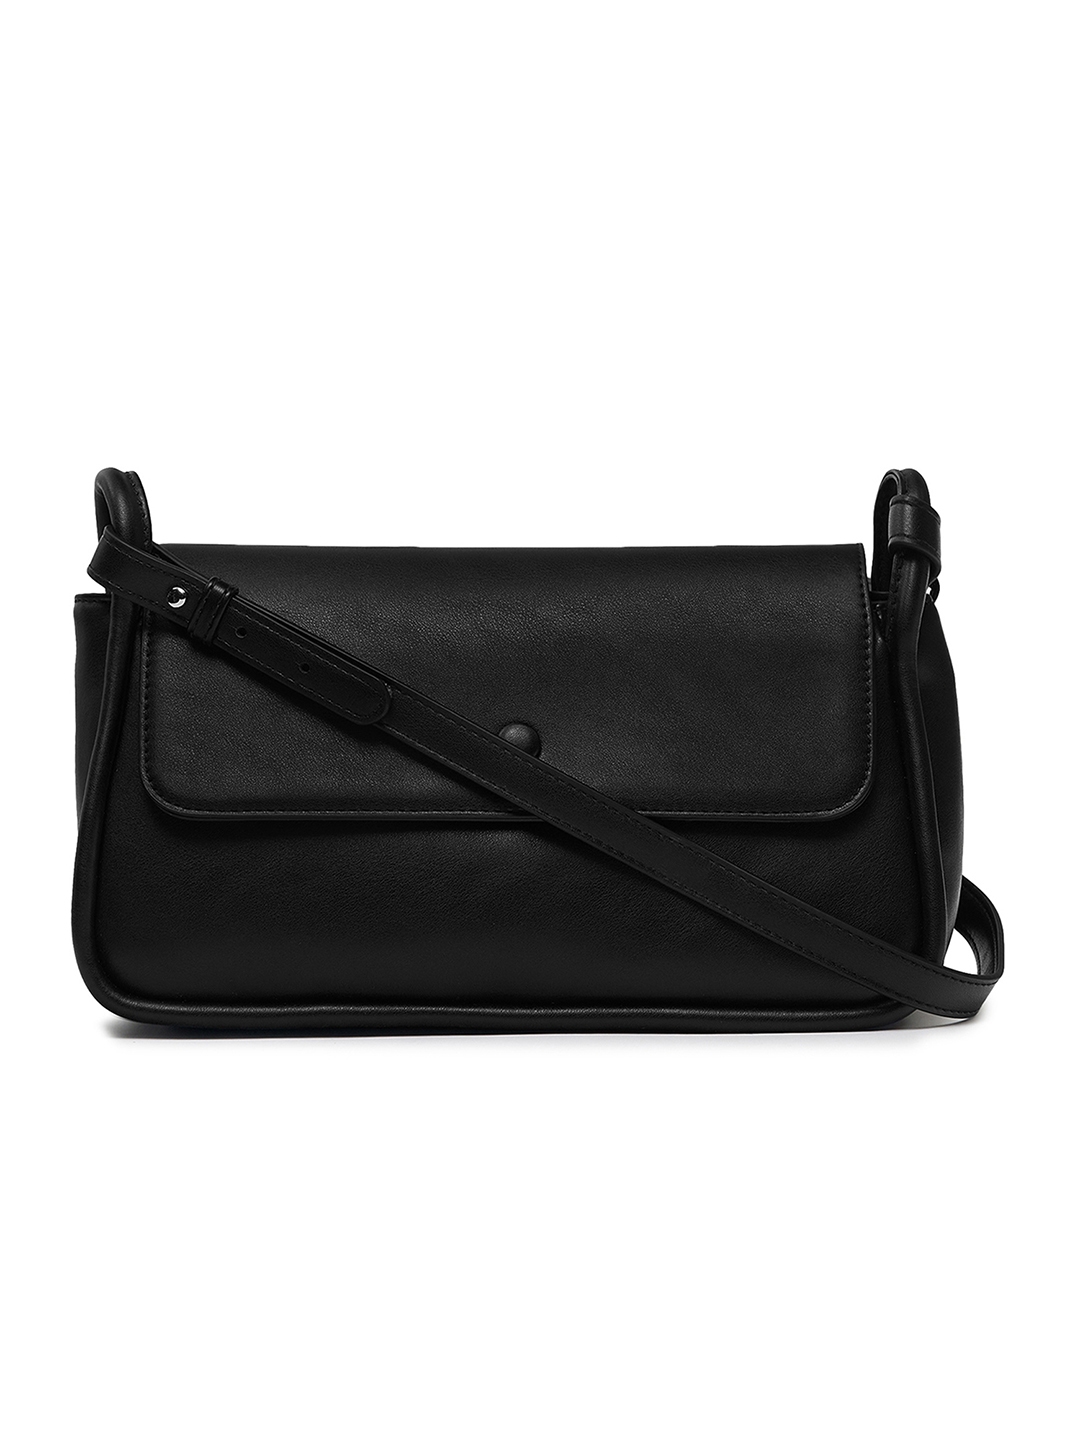 Buy MIRAGGIO Black Structured Shoulder Bag - Handbags for Women ...